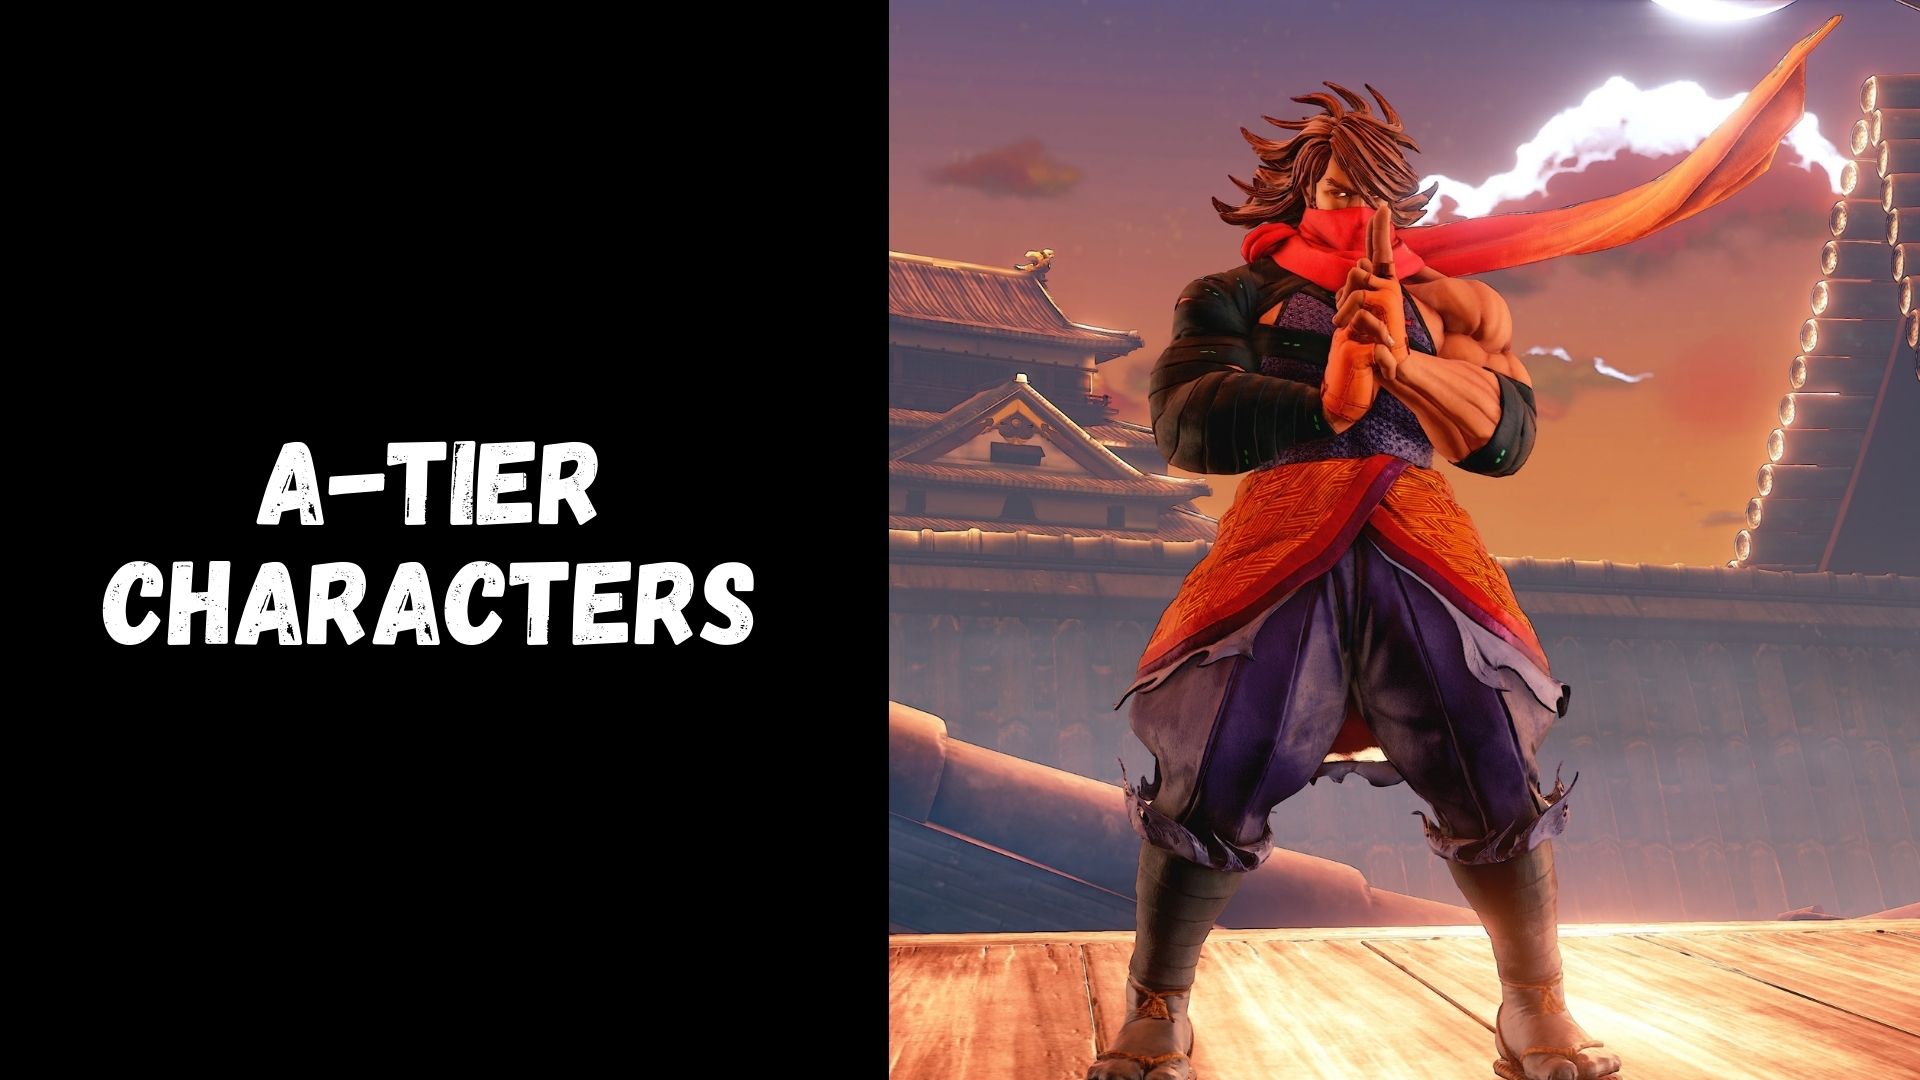 Street Fighter 5 Tier List